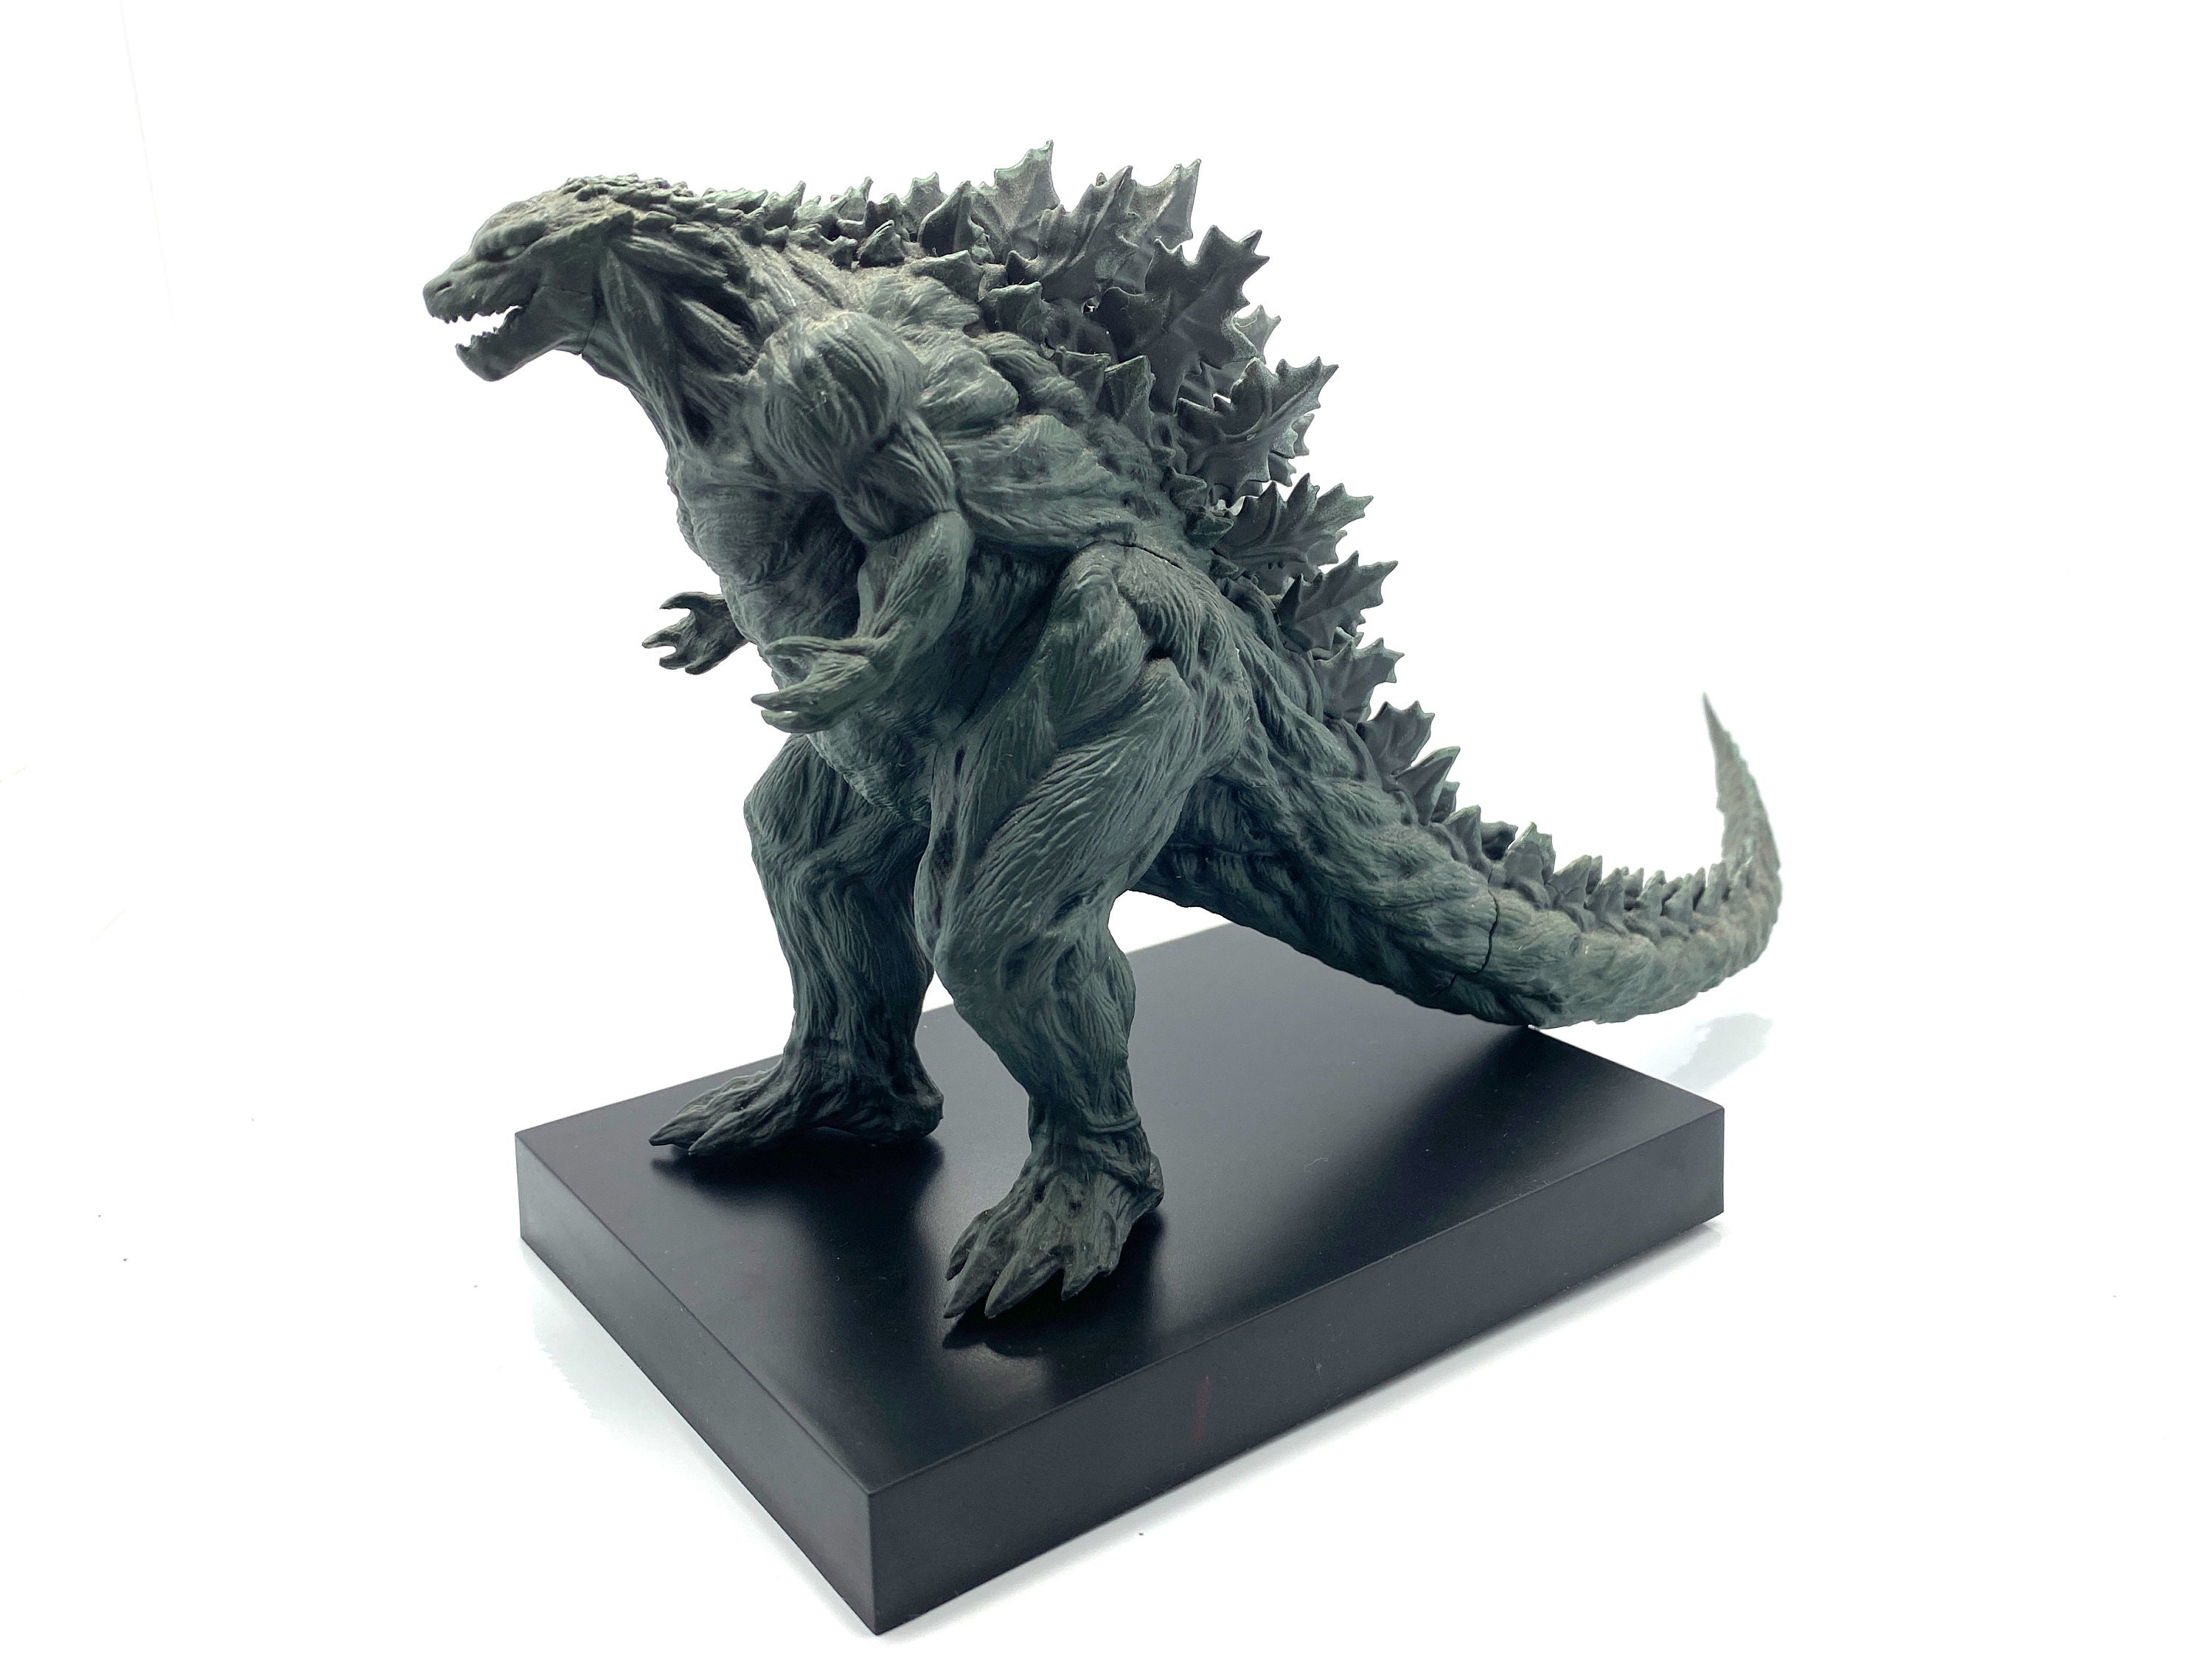 Godzilla: Planet of the Monsters Mega-Size Godzilla Action Figure